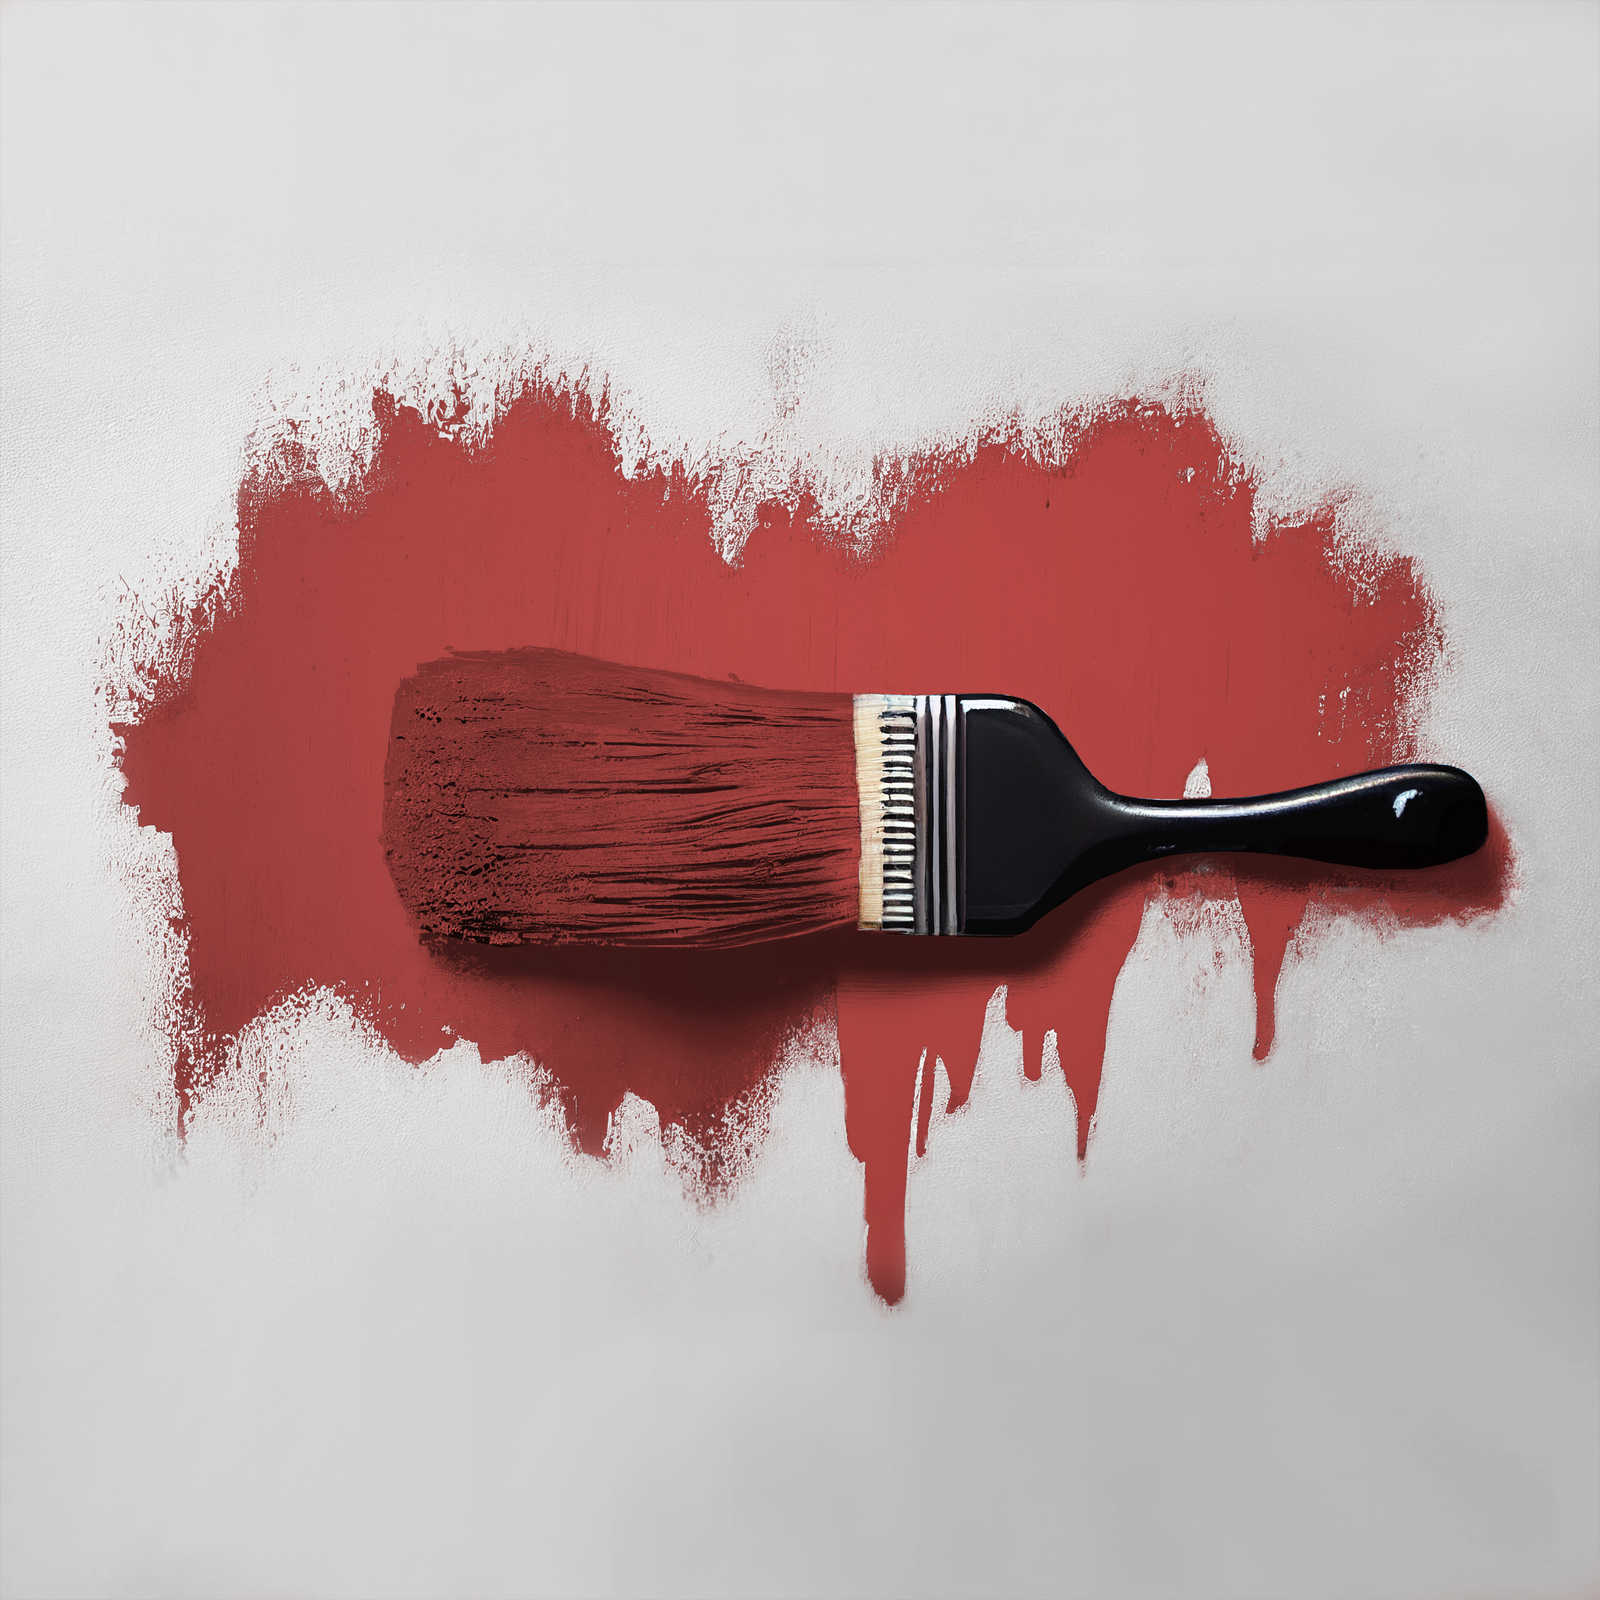             Peinture murale TCK7005 »Cheeky Chilli« en rouge feu vif – 5,0 litres
        